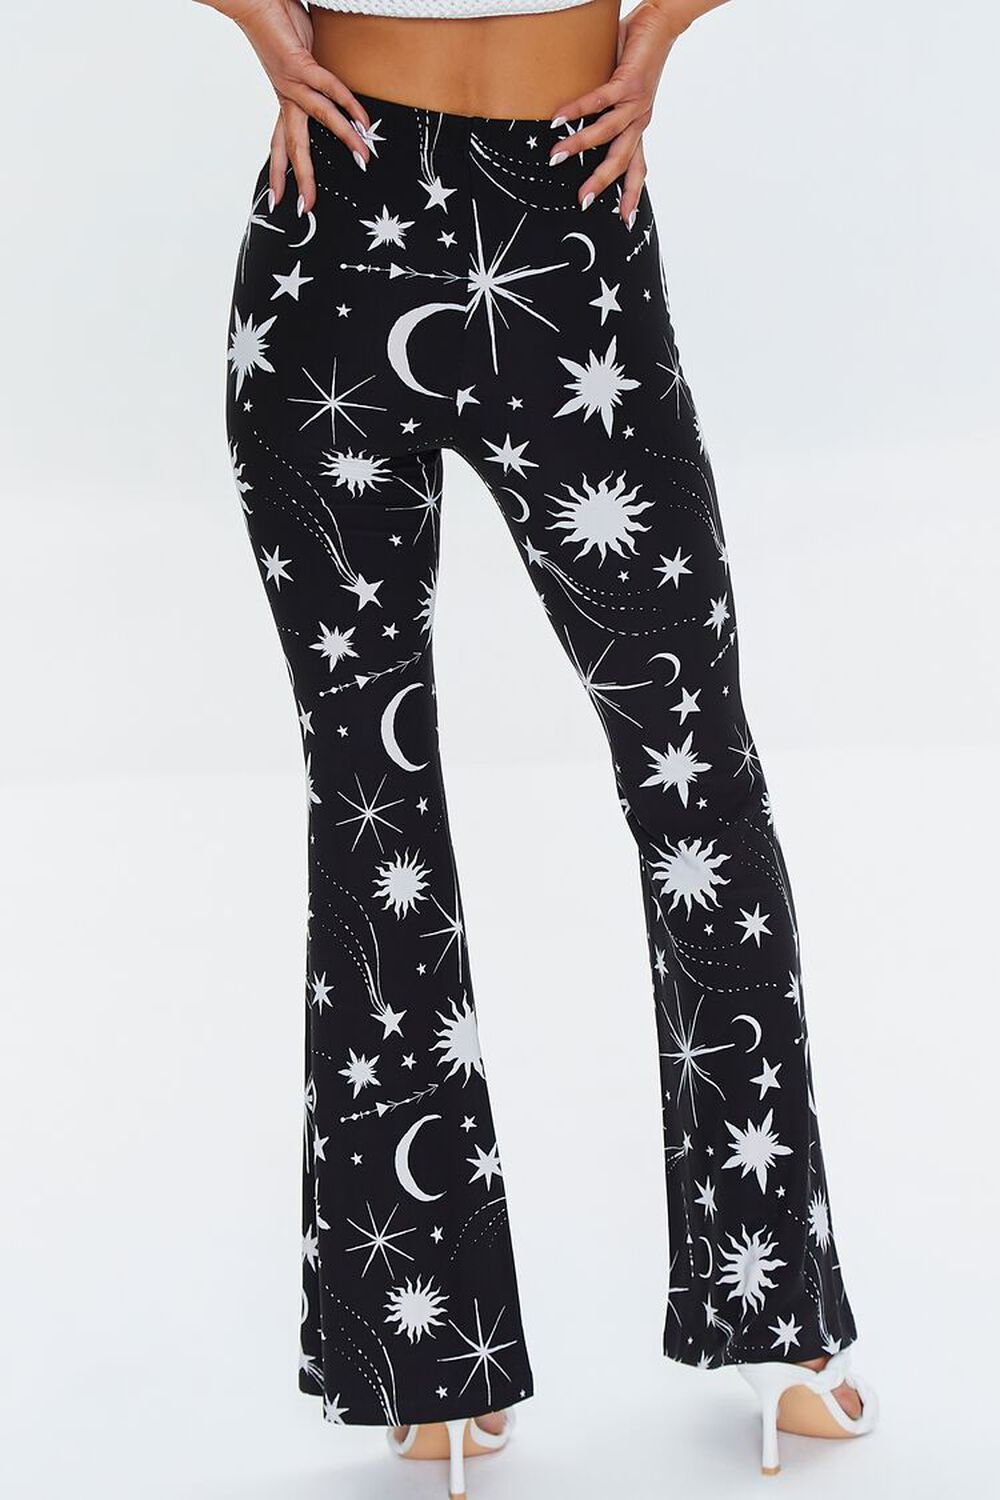 Celestial Print Flare Pants